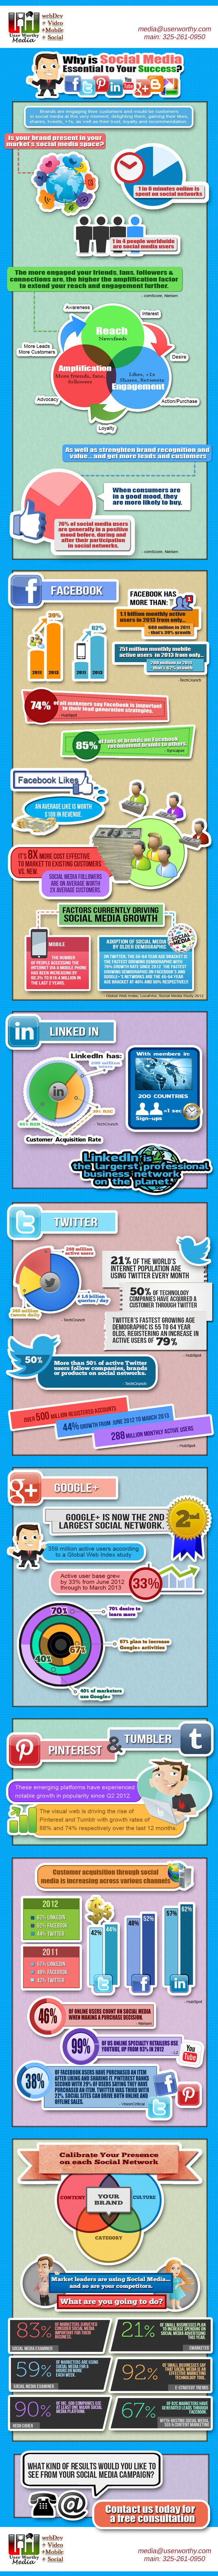 Social Media Infographics 2013 UserWorthyMedia.com